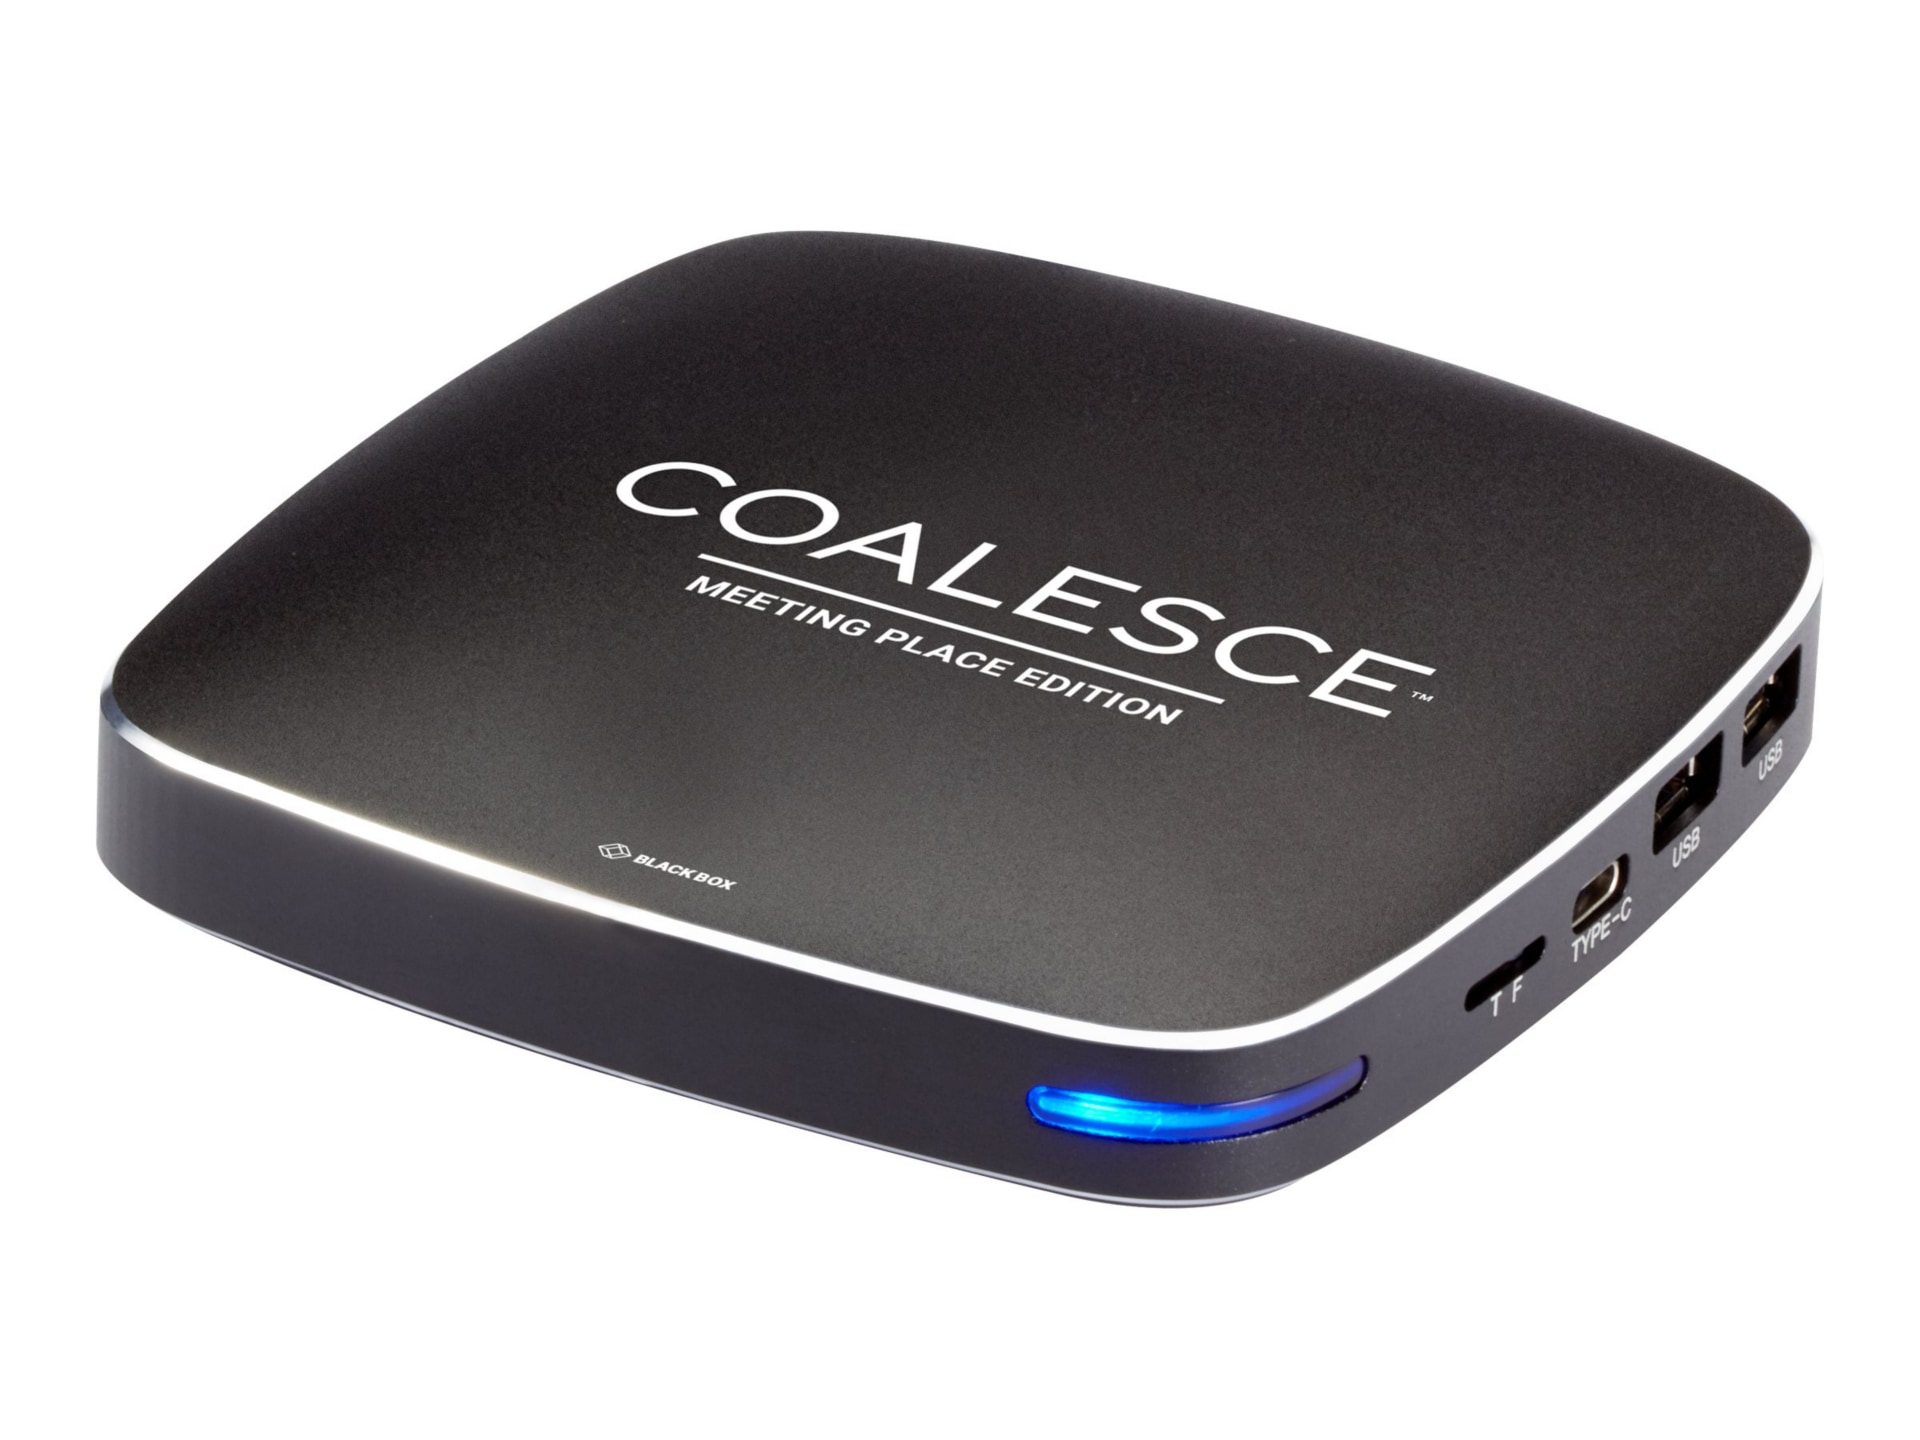 Black Box Coalesce Meeting Place Edition Wireless Presentation System - digital signage player